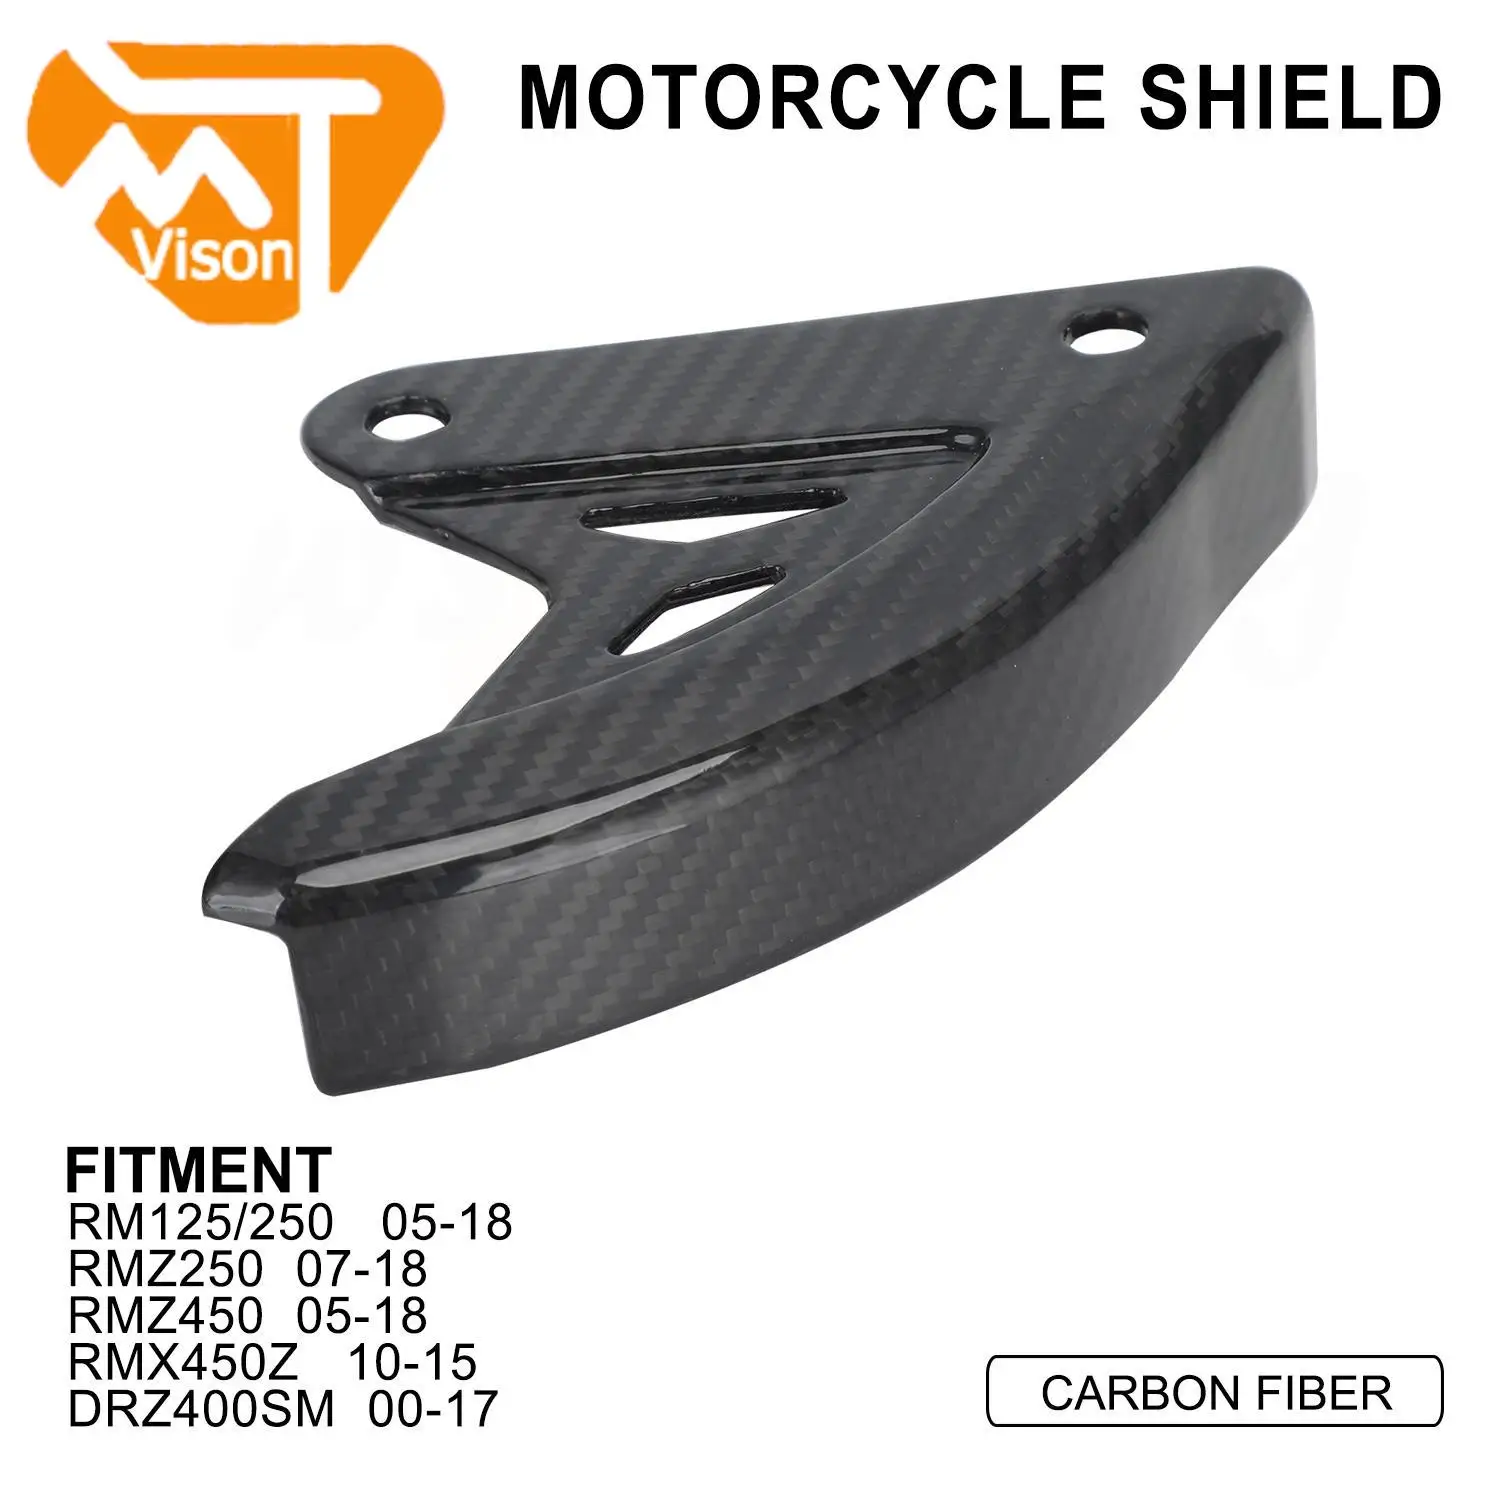 

Funparts Brake Disc Guard Motorcycle Carbon Fiber Rear Brake Disc Cover Protection for RM 125 250 RMZ 250 450 RMX450Z DRZ400SM